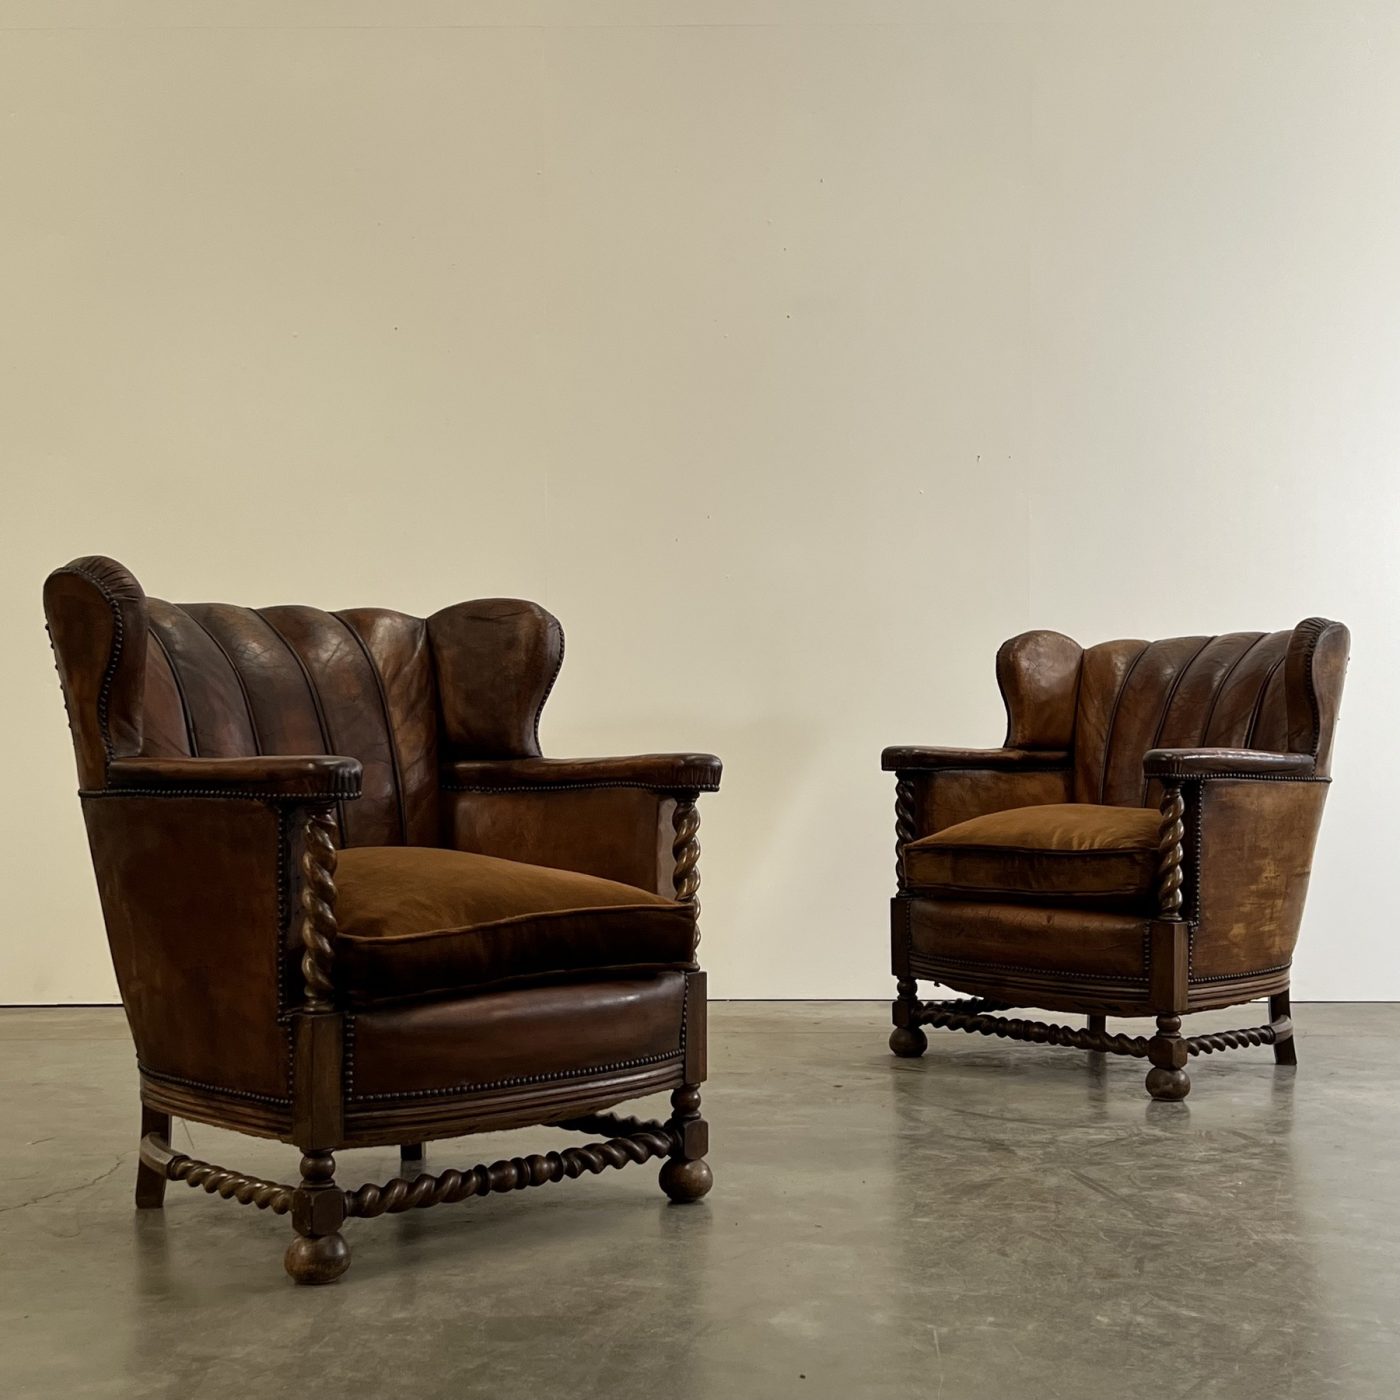 objet-vagabond-leather-chairs0000